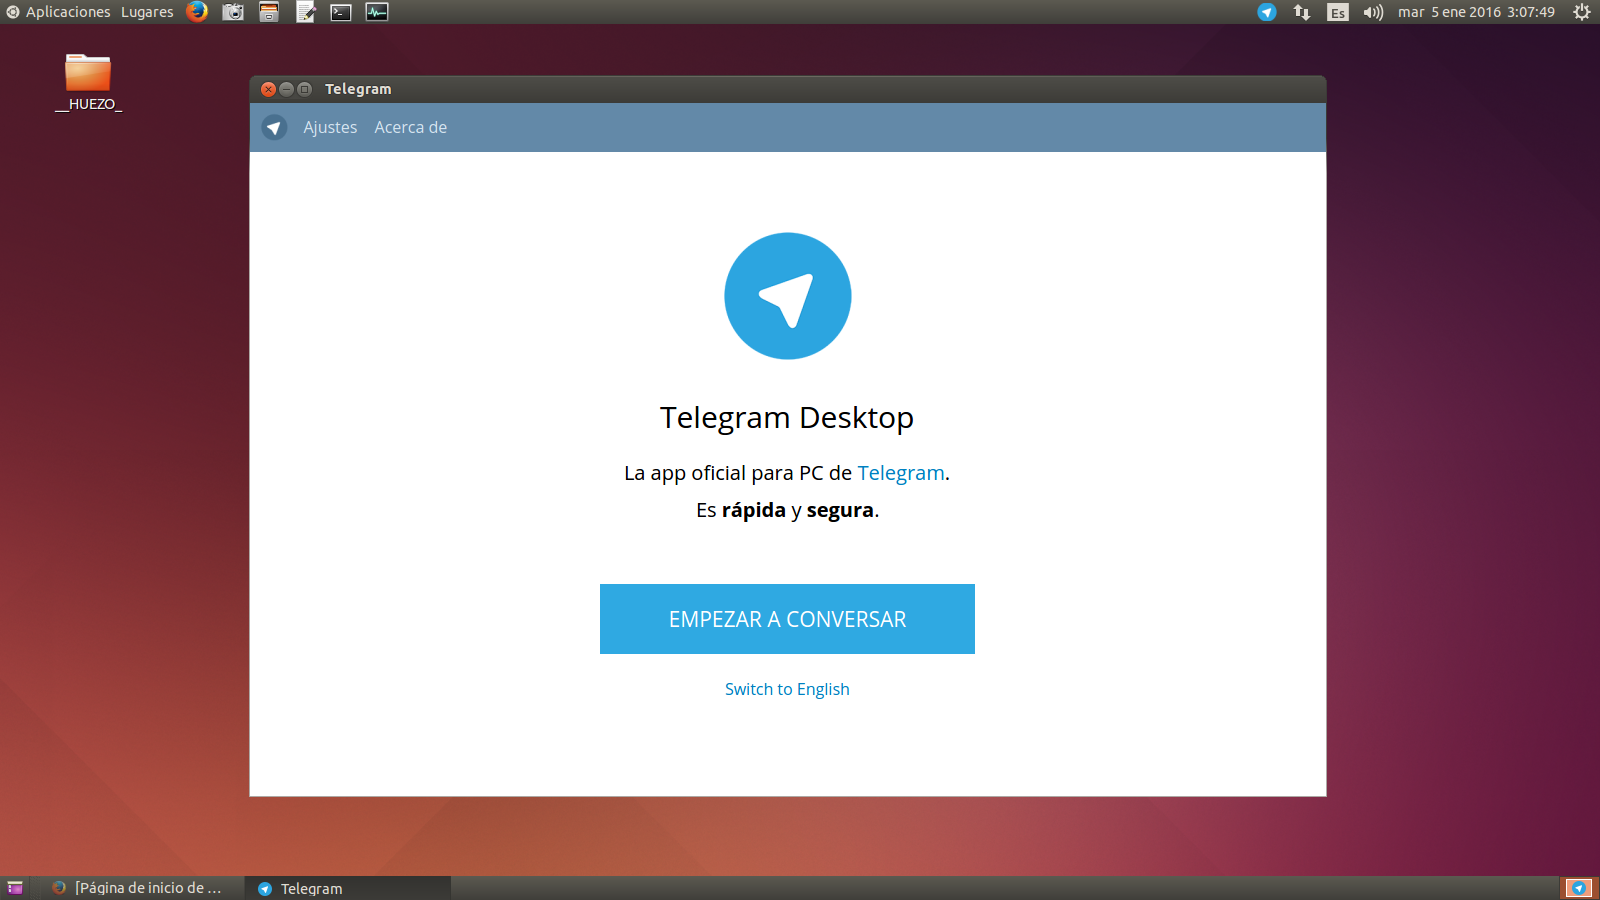 telegram desktop portable download